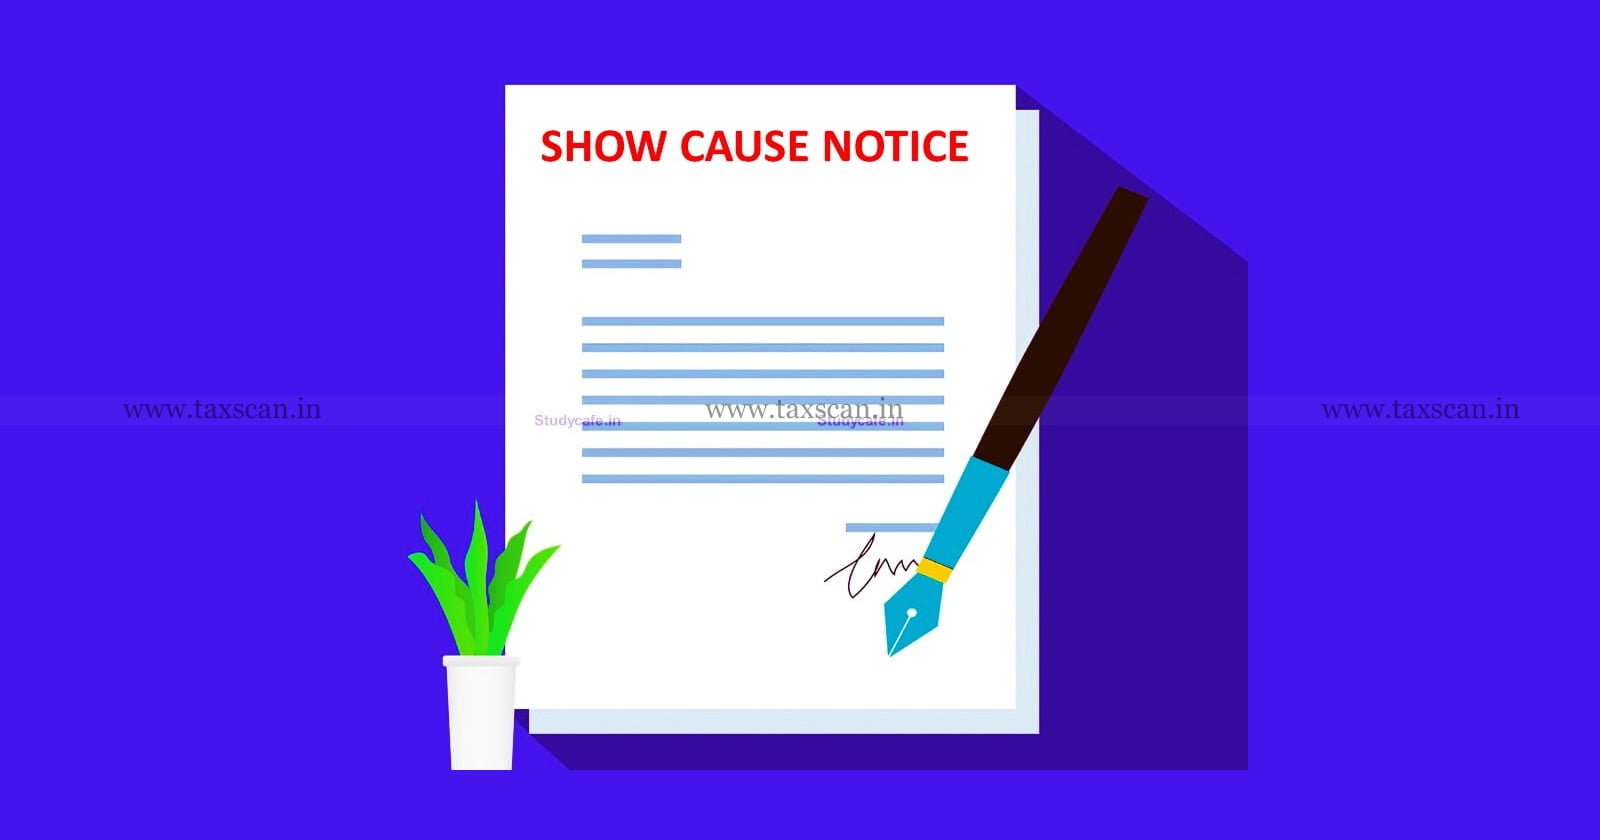 CESTAT - CESTAT Ahmedabad - SCN - show cause notice - service tax - taxscan